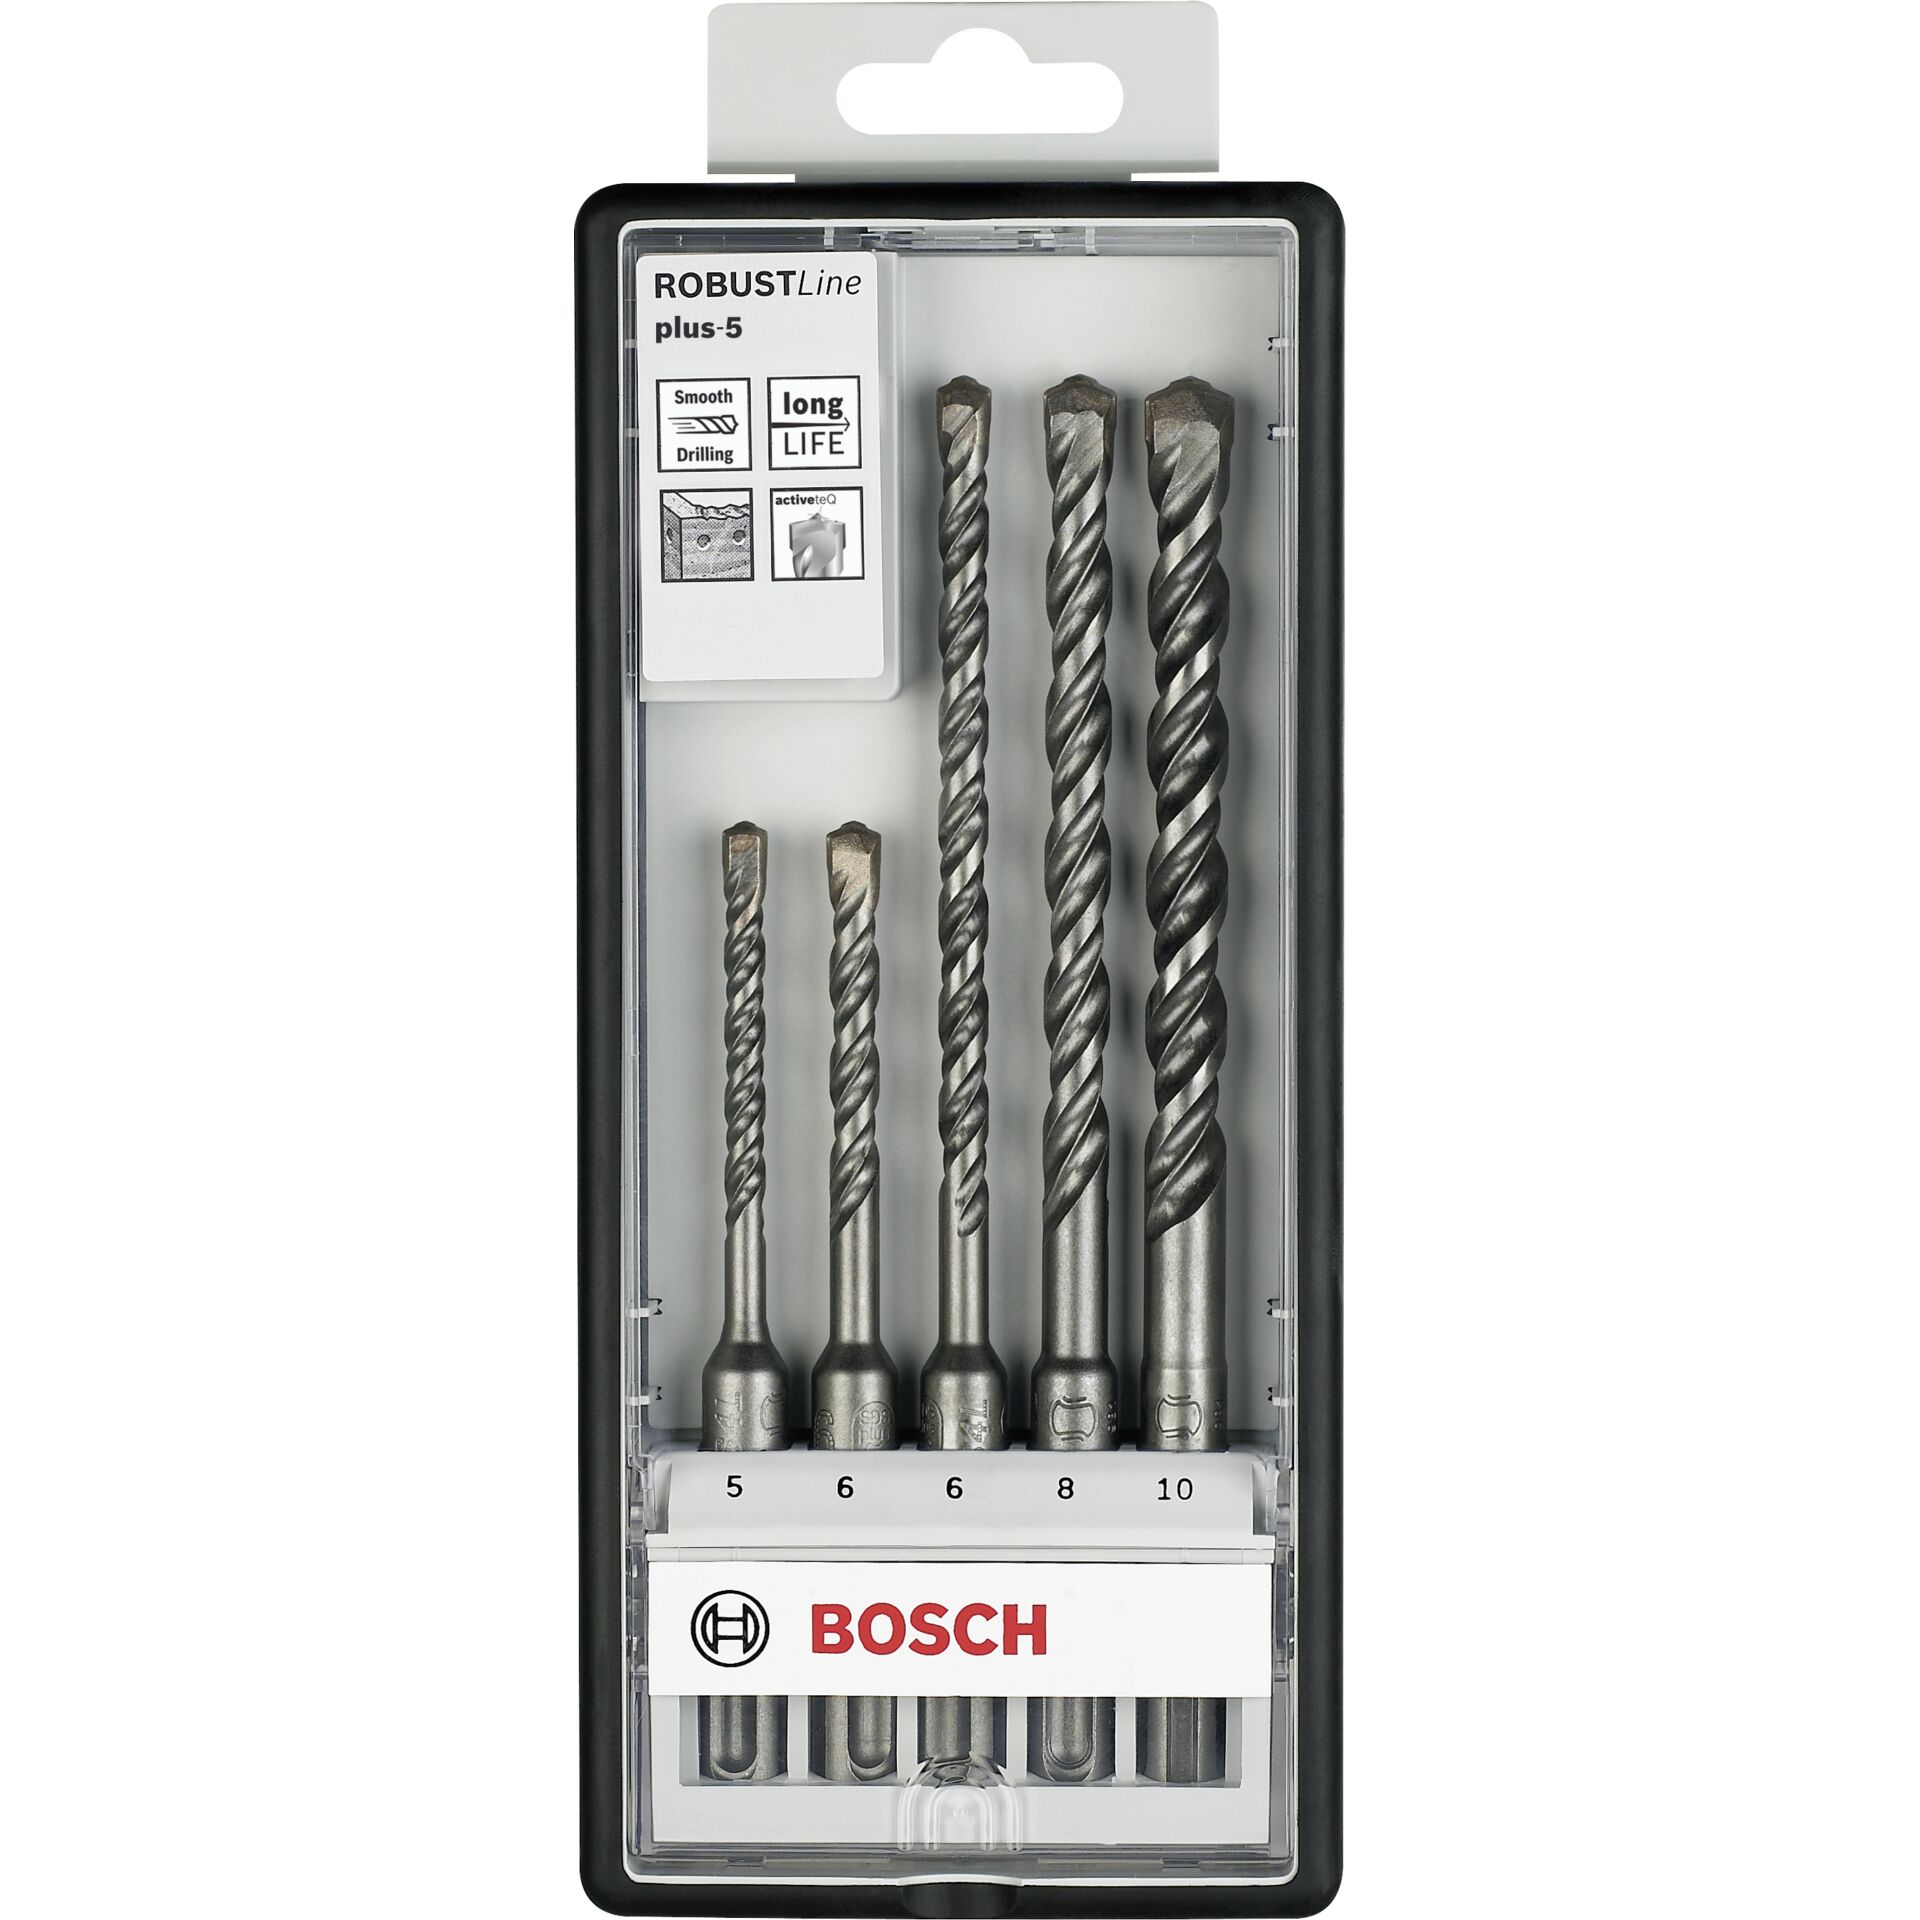 Bosch 5tlg. plus-5 Robust Line Set